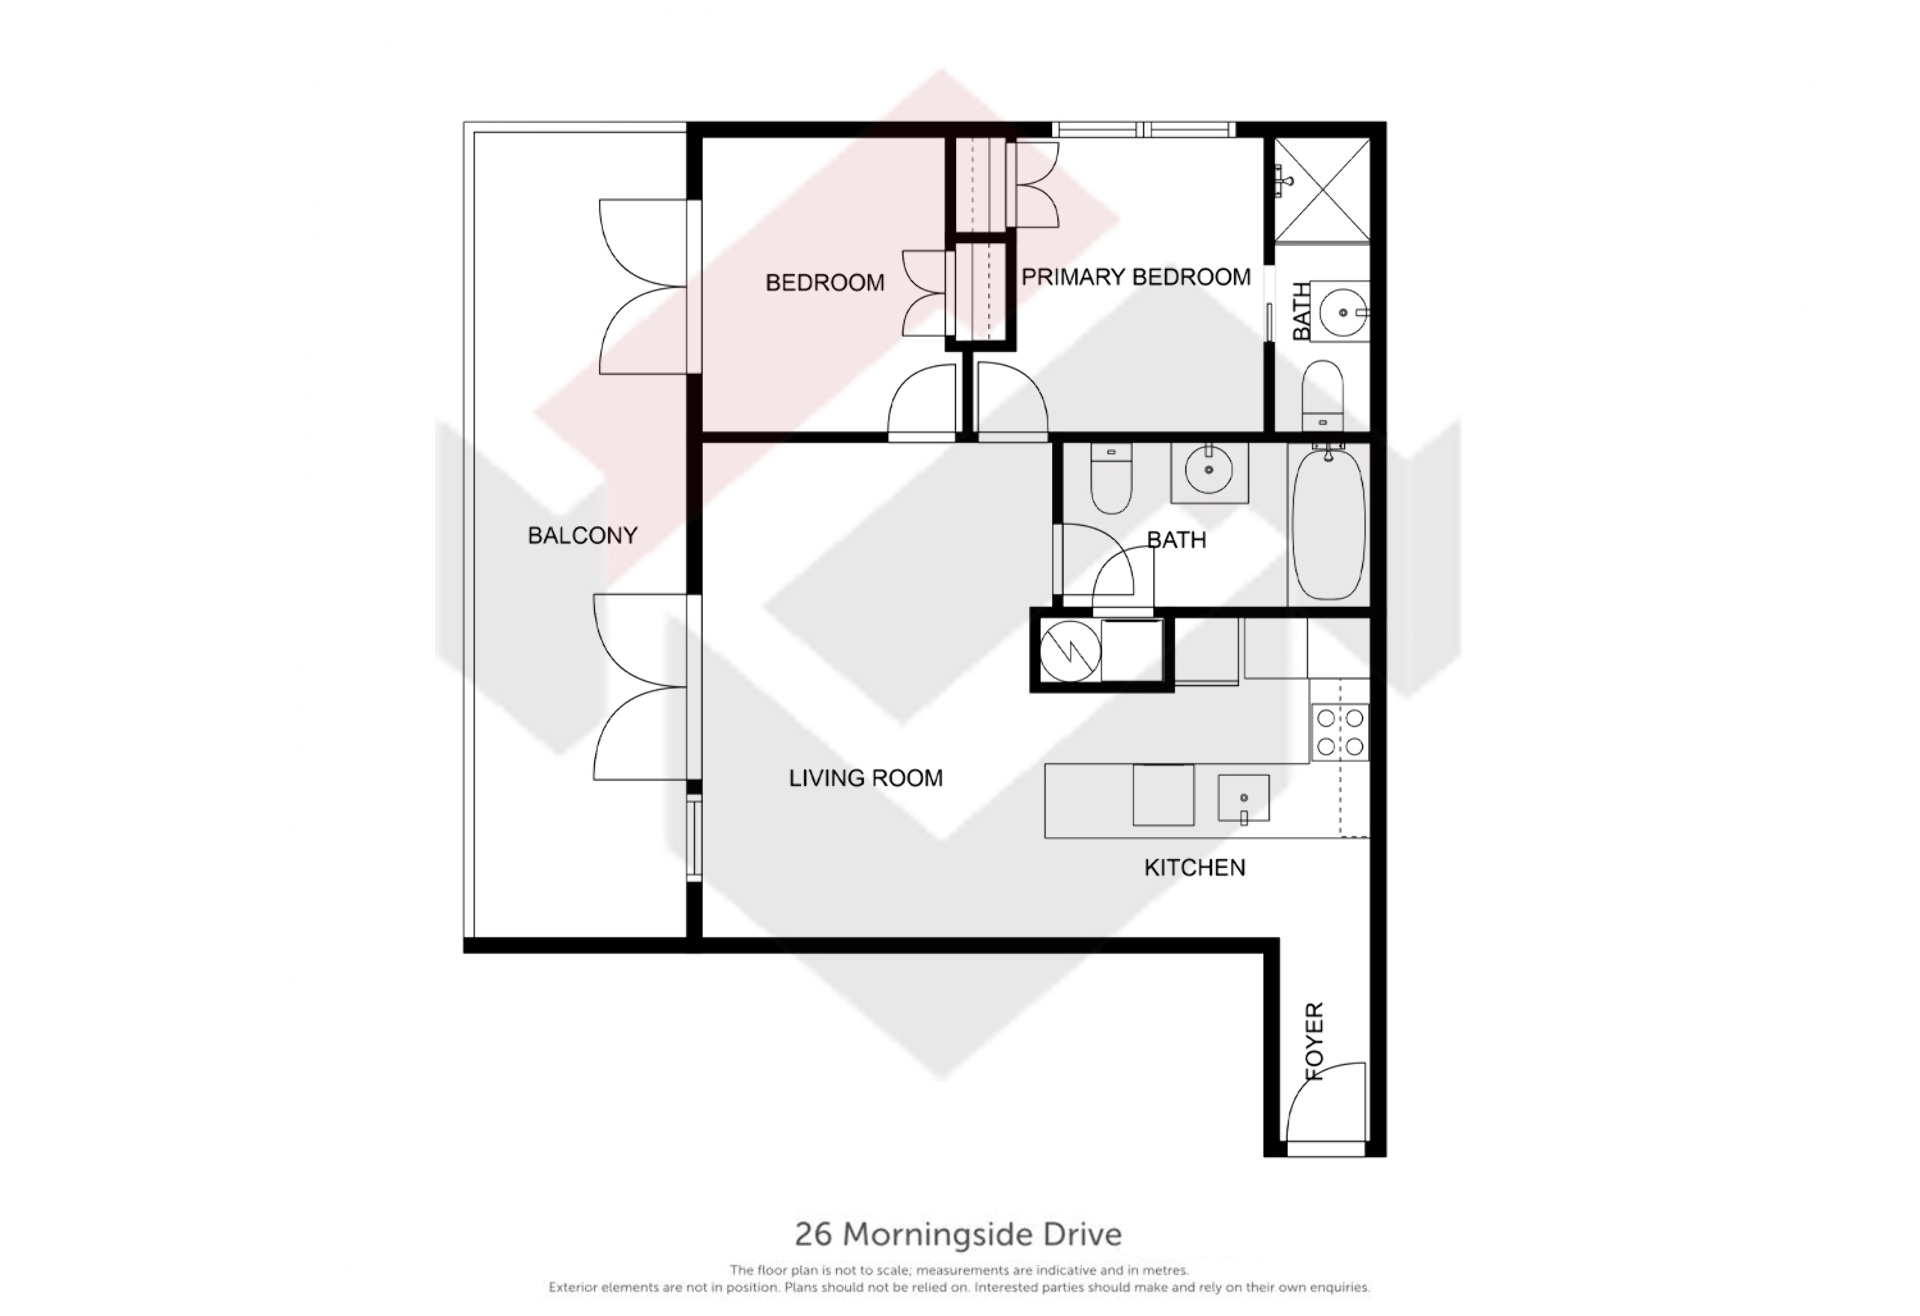 Floorplan | 26 Morningside Drive, Morningside | Apartment Specialists